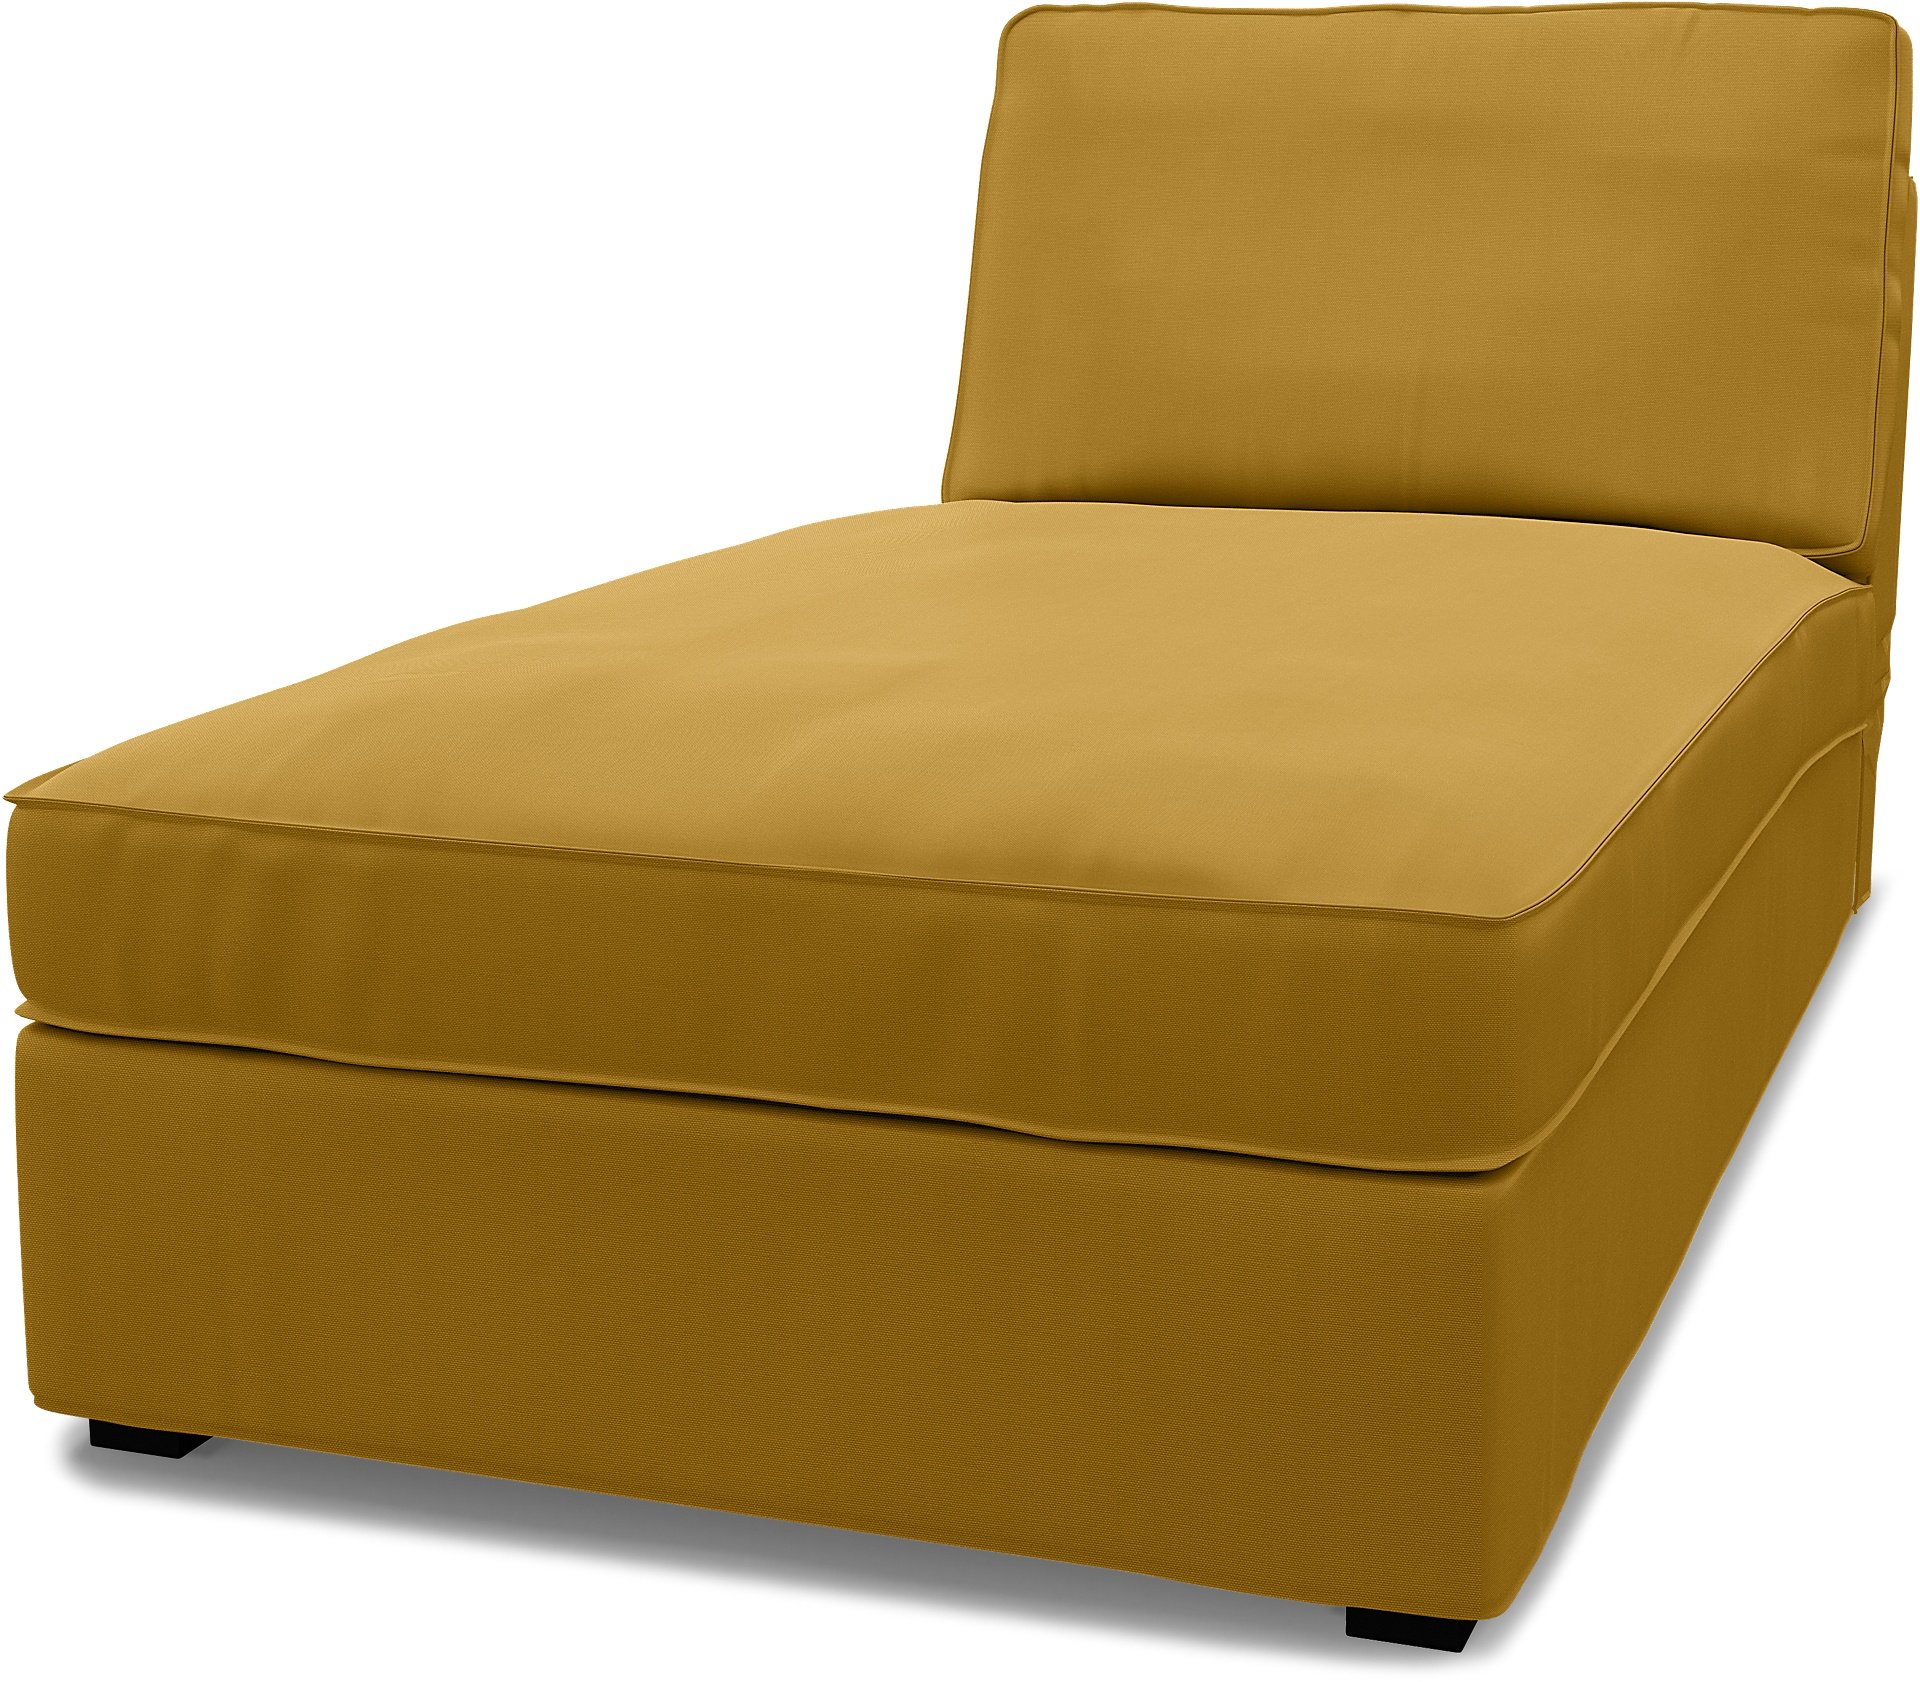 IKEA - Kivik Chaise Longue Cover, Honey Mustard, Cotton - Bemz